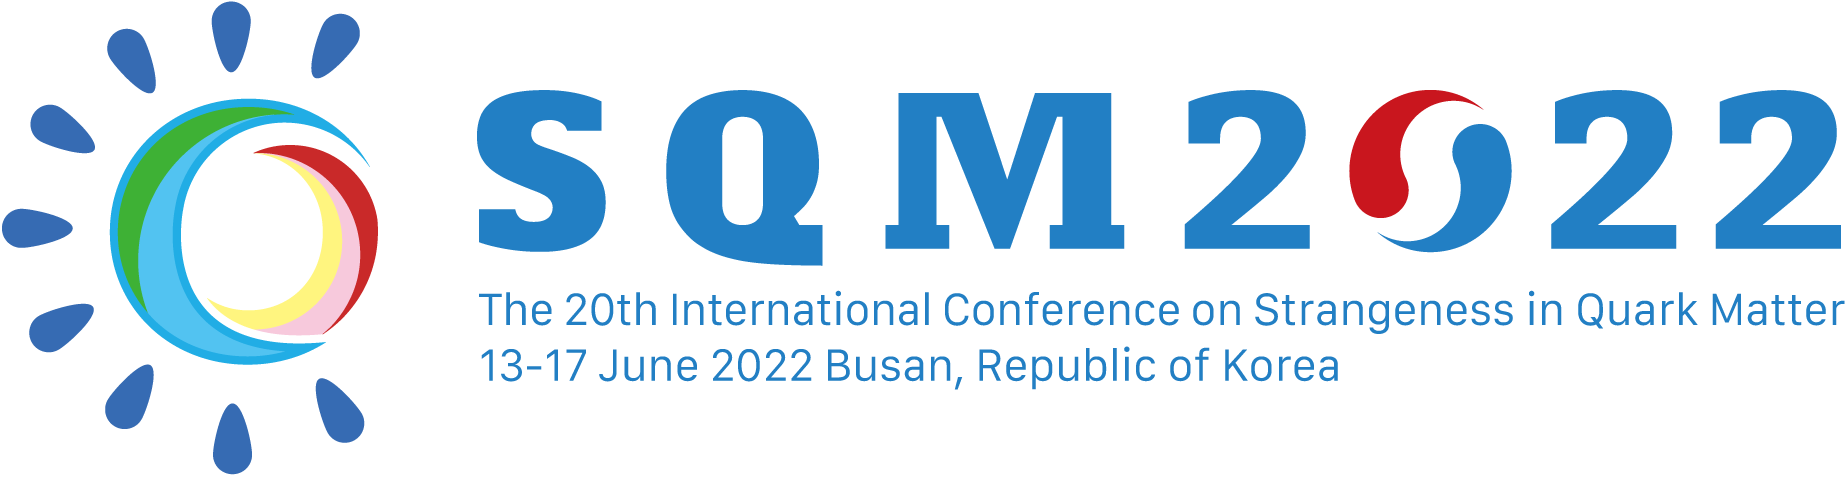 The 20th International Conference on Strangeness in Quark Matters 2022, 13-18 Jun 2022, Busan, Republic of Korea